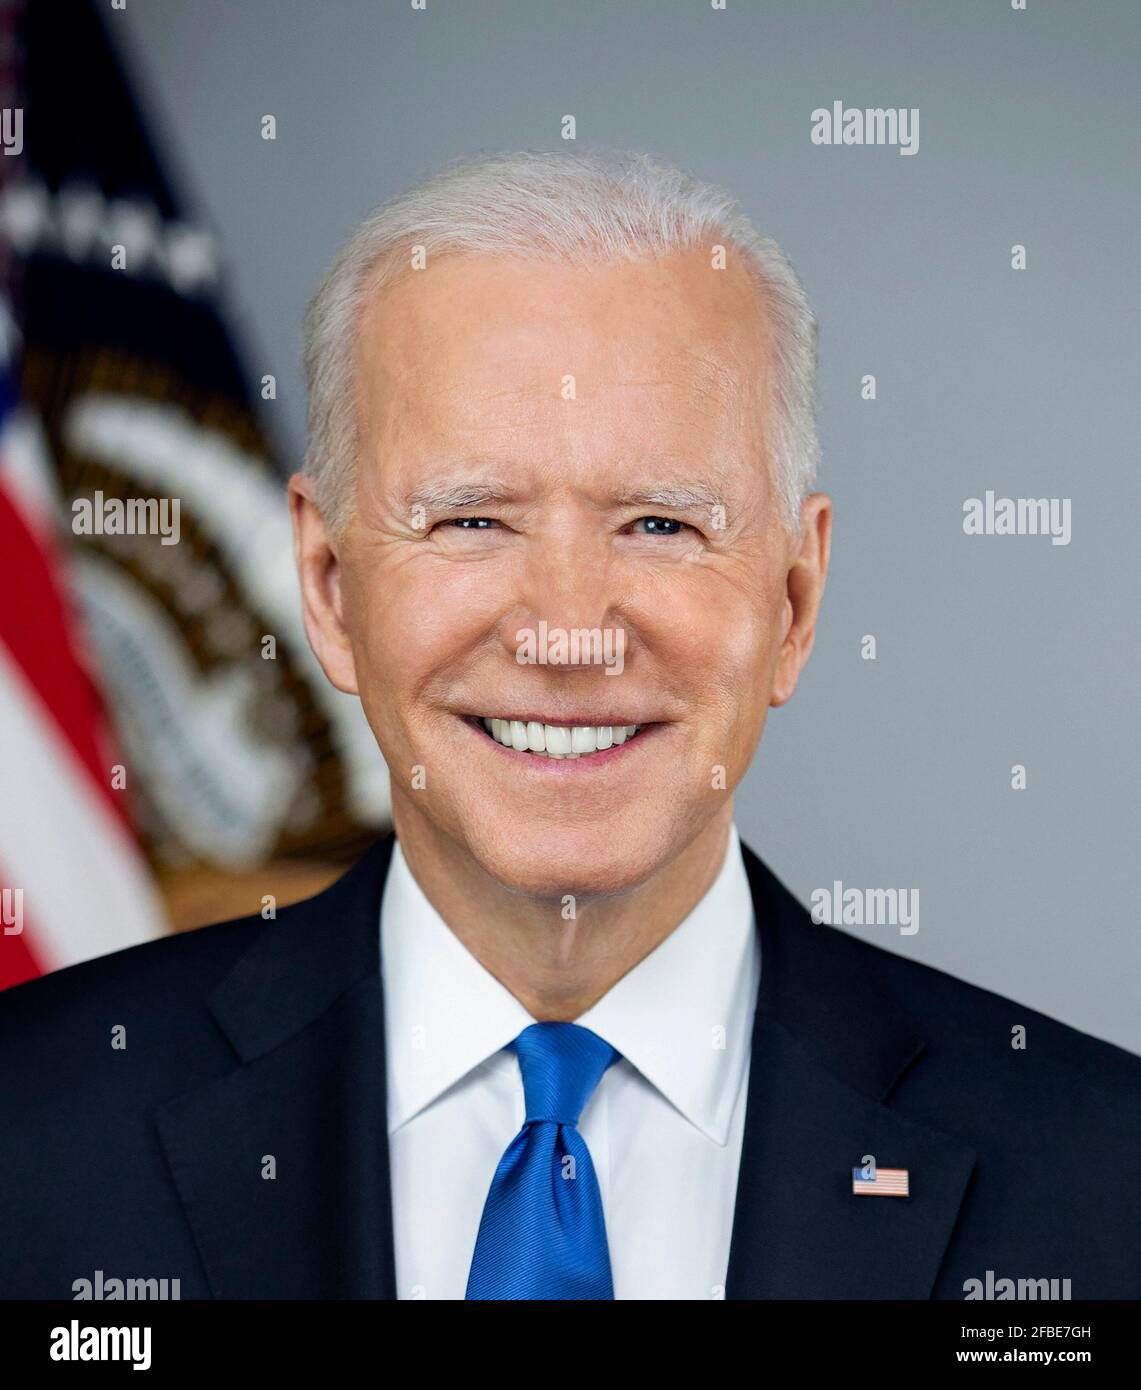 Joe Biden. Portrait of the 46th President of the United States, Joseph Robinette Biden Jr. (b.1942), March 2021. Official White House photo. Stock Photo